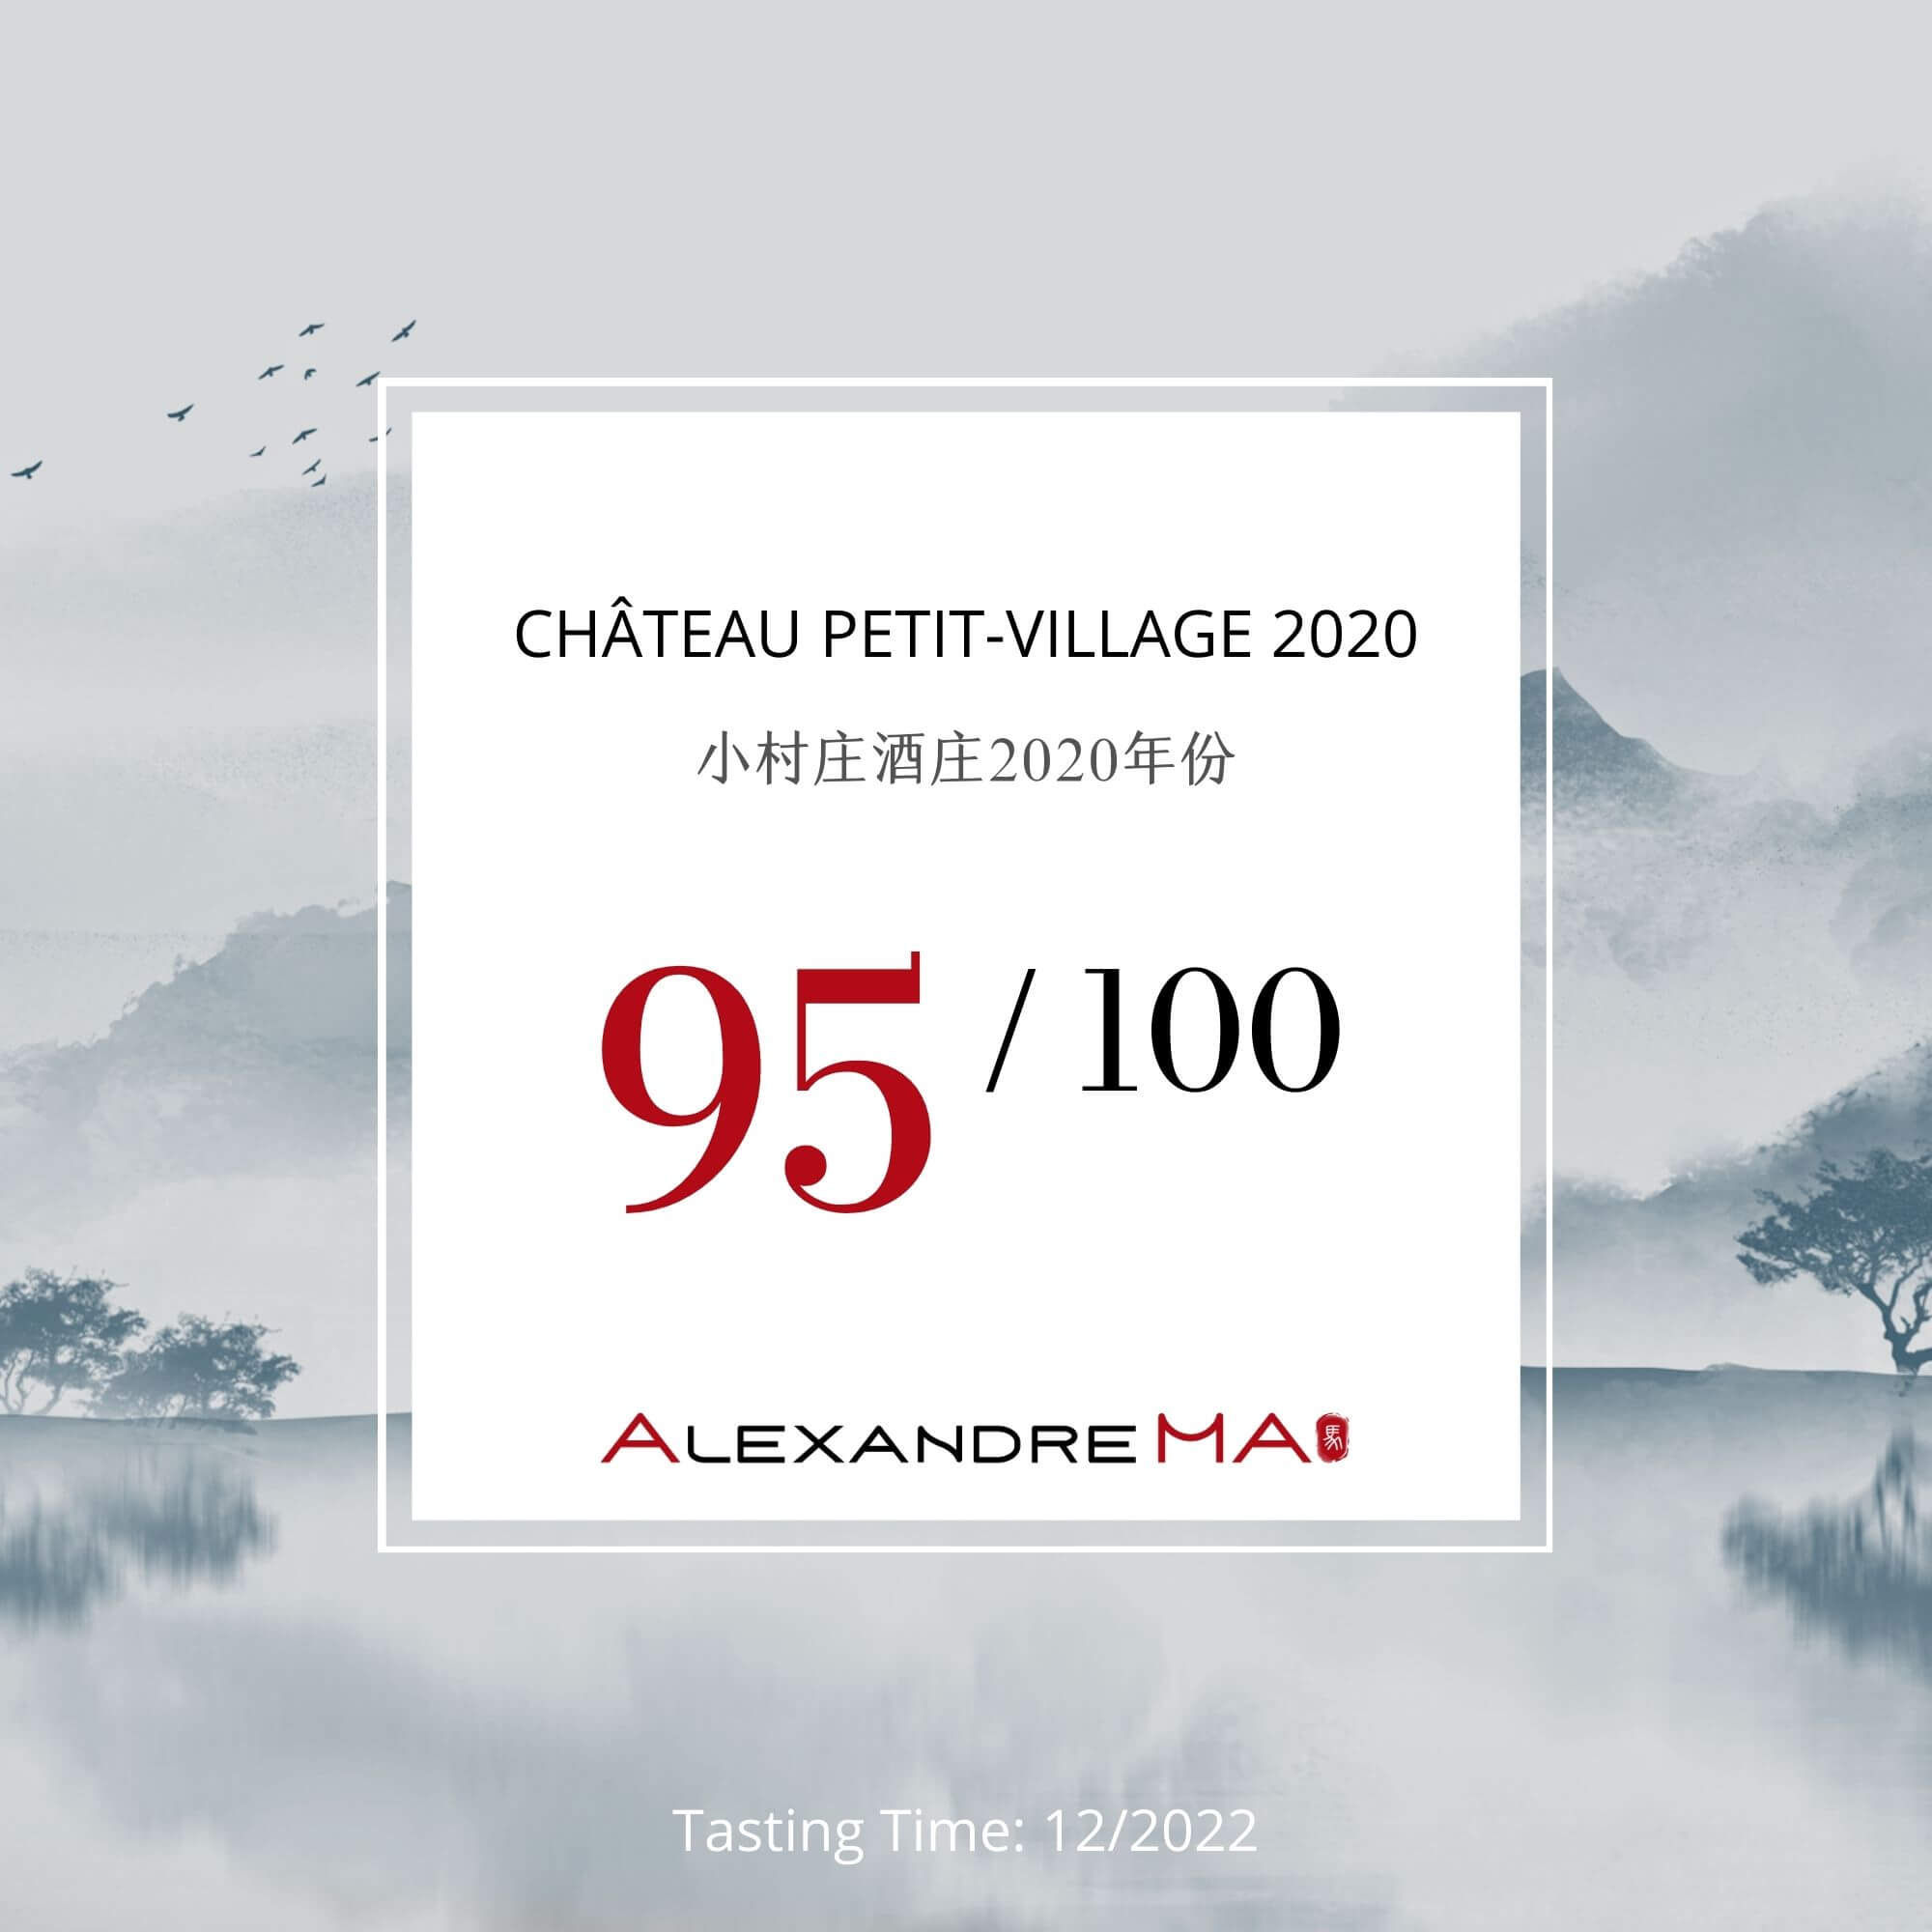 Château Petit-Village 2020 - Alexandre MA